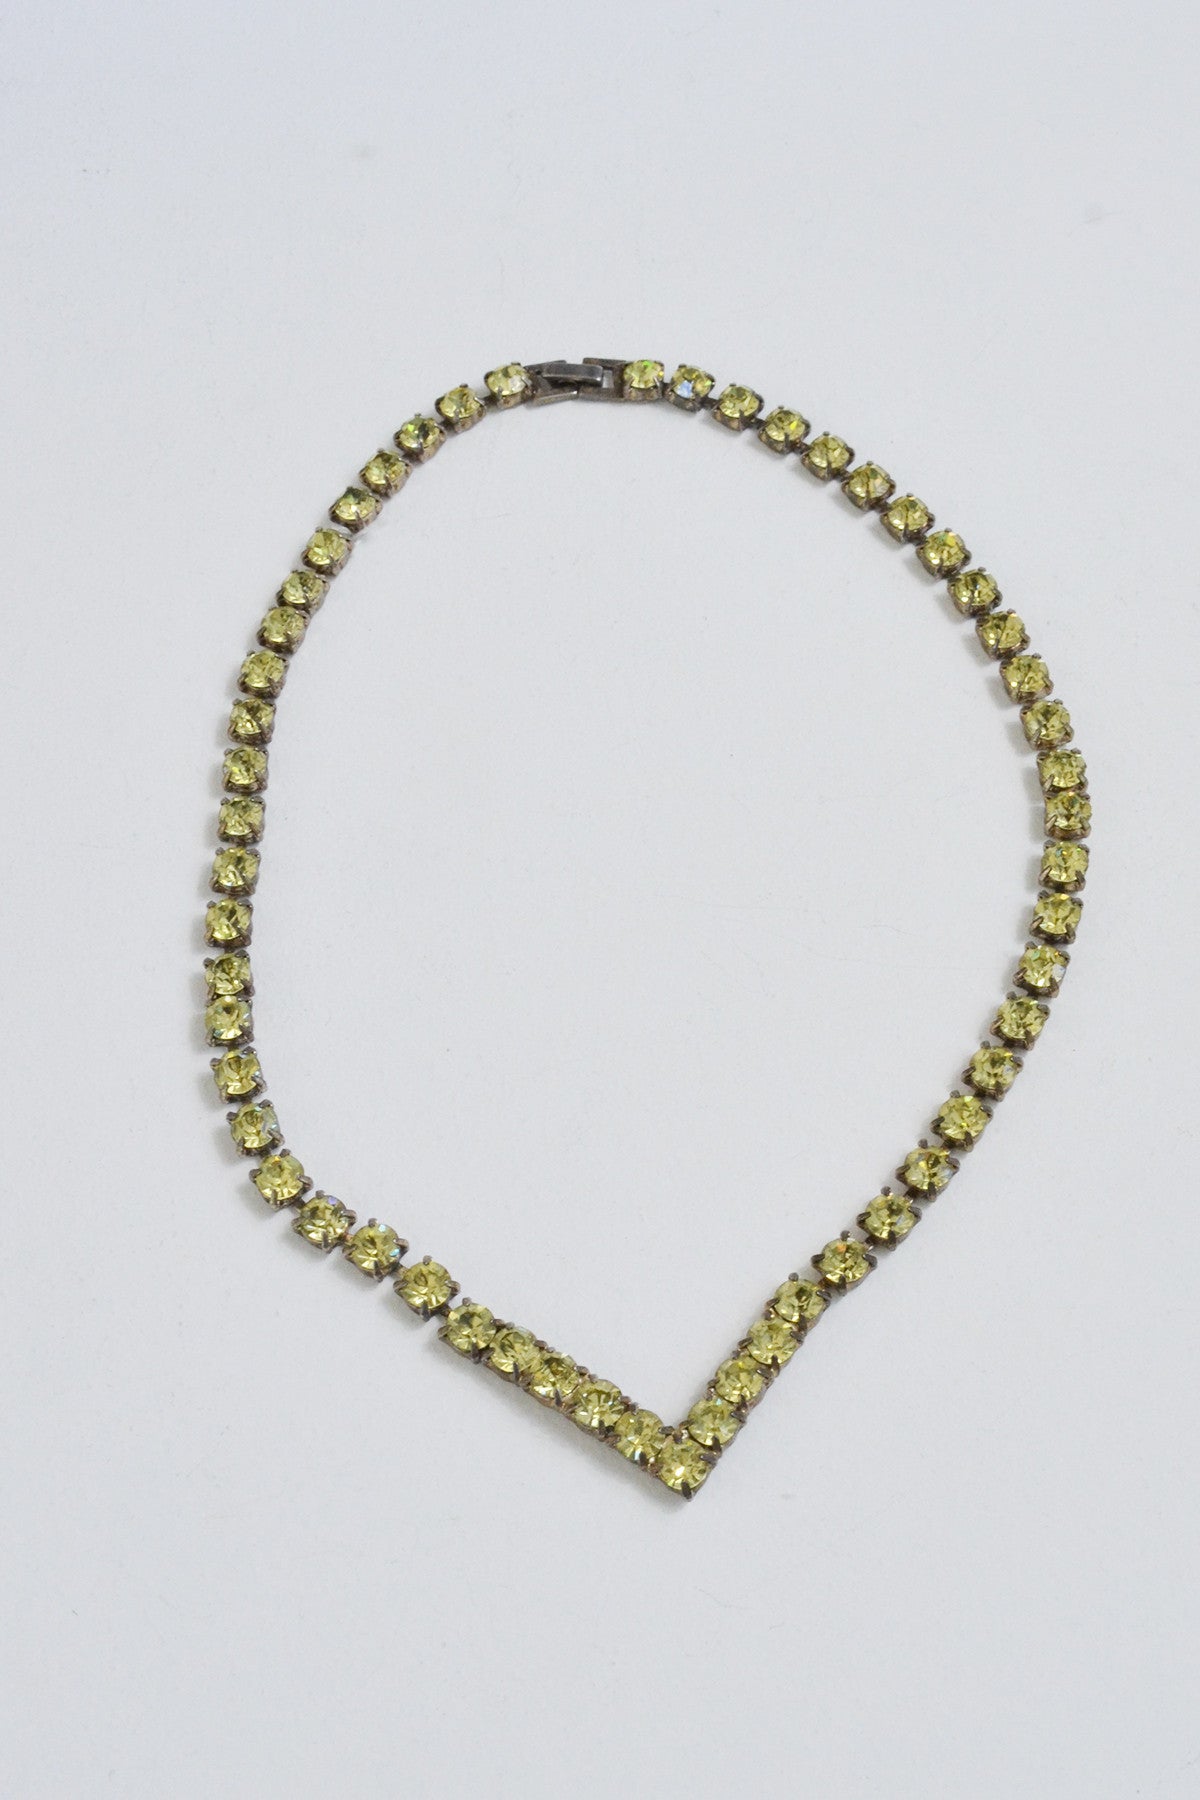 Vintage Rhinestone Chevron Style Necklace